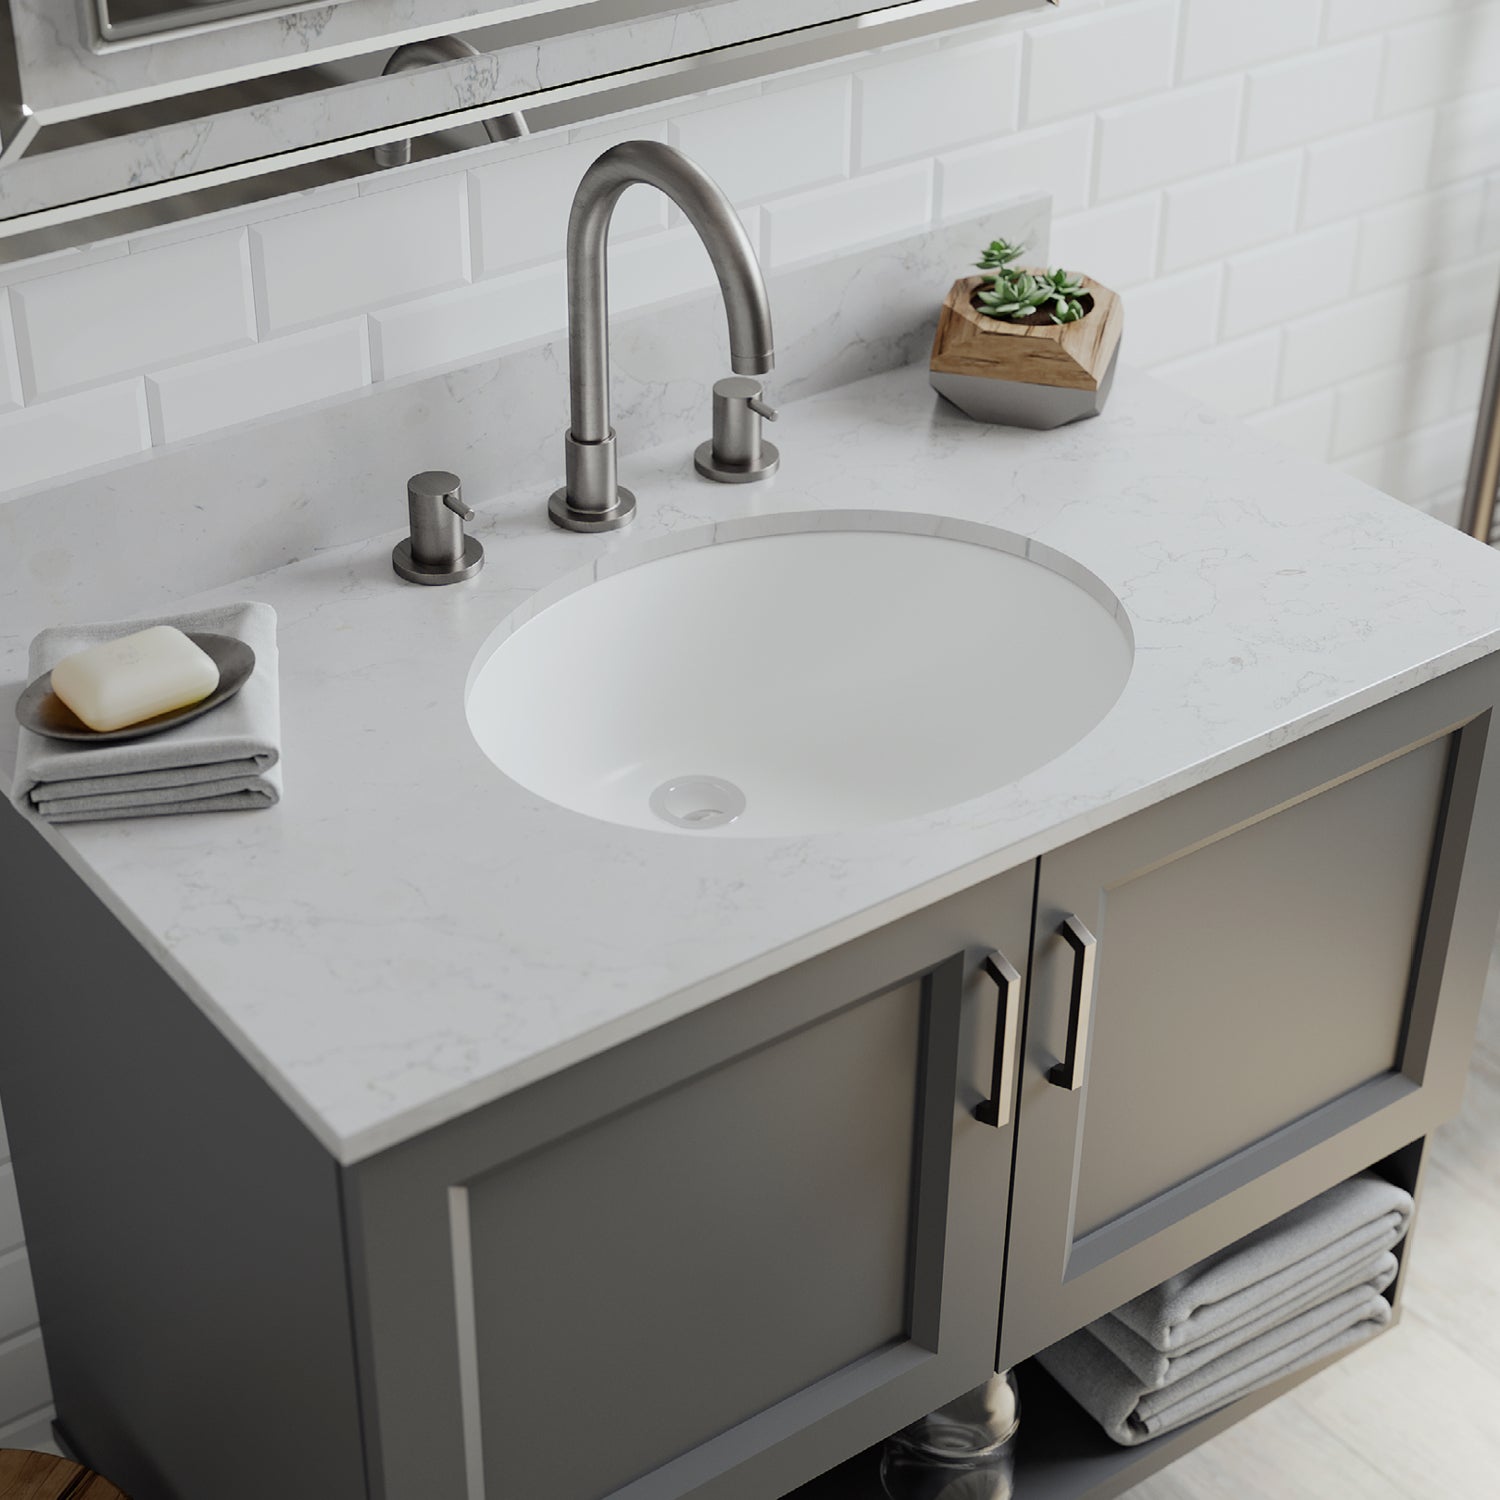 Lexicon Platinum V210 Quartz Composite Oval Vanity Sink